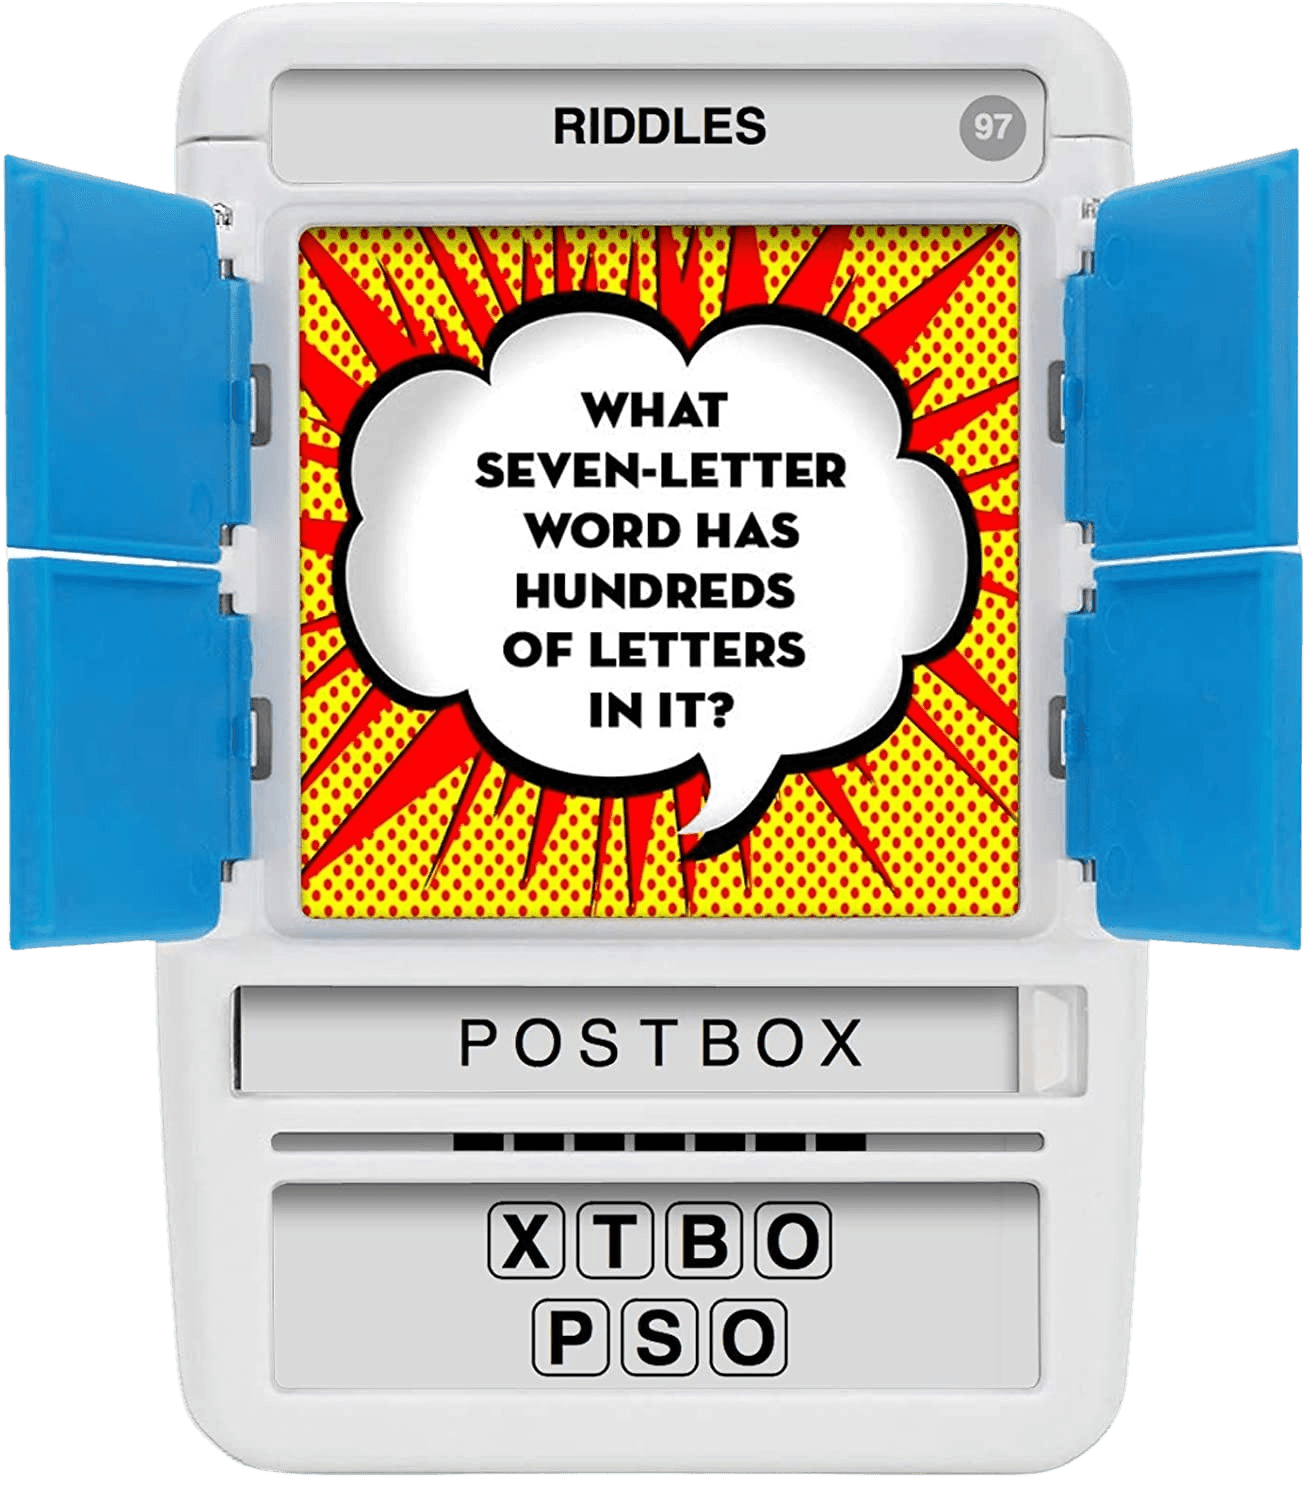 100 PICS - Riddles - The Card Vault